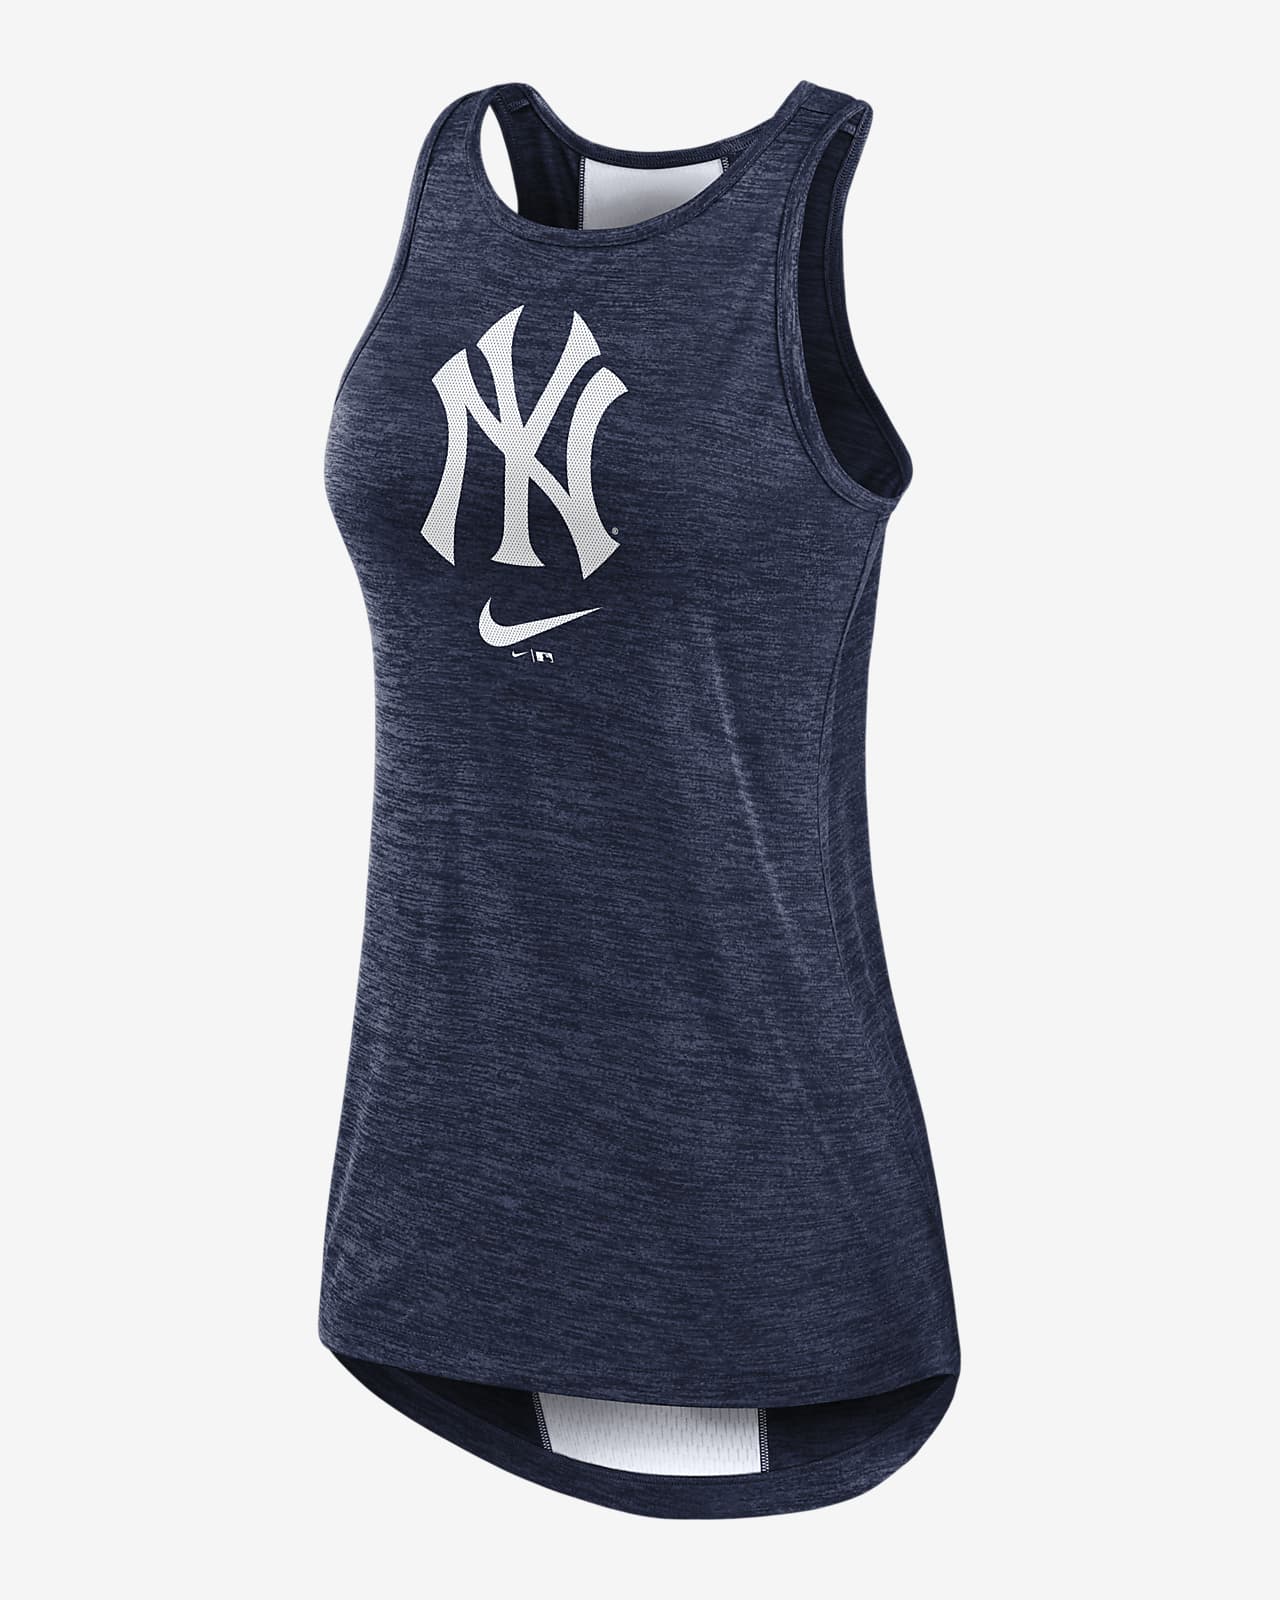 Nike Dri-FIT Right Mix (MLB New York Yankees) Women's High-Neck Tank Top.